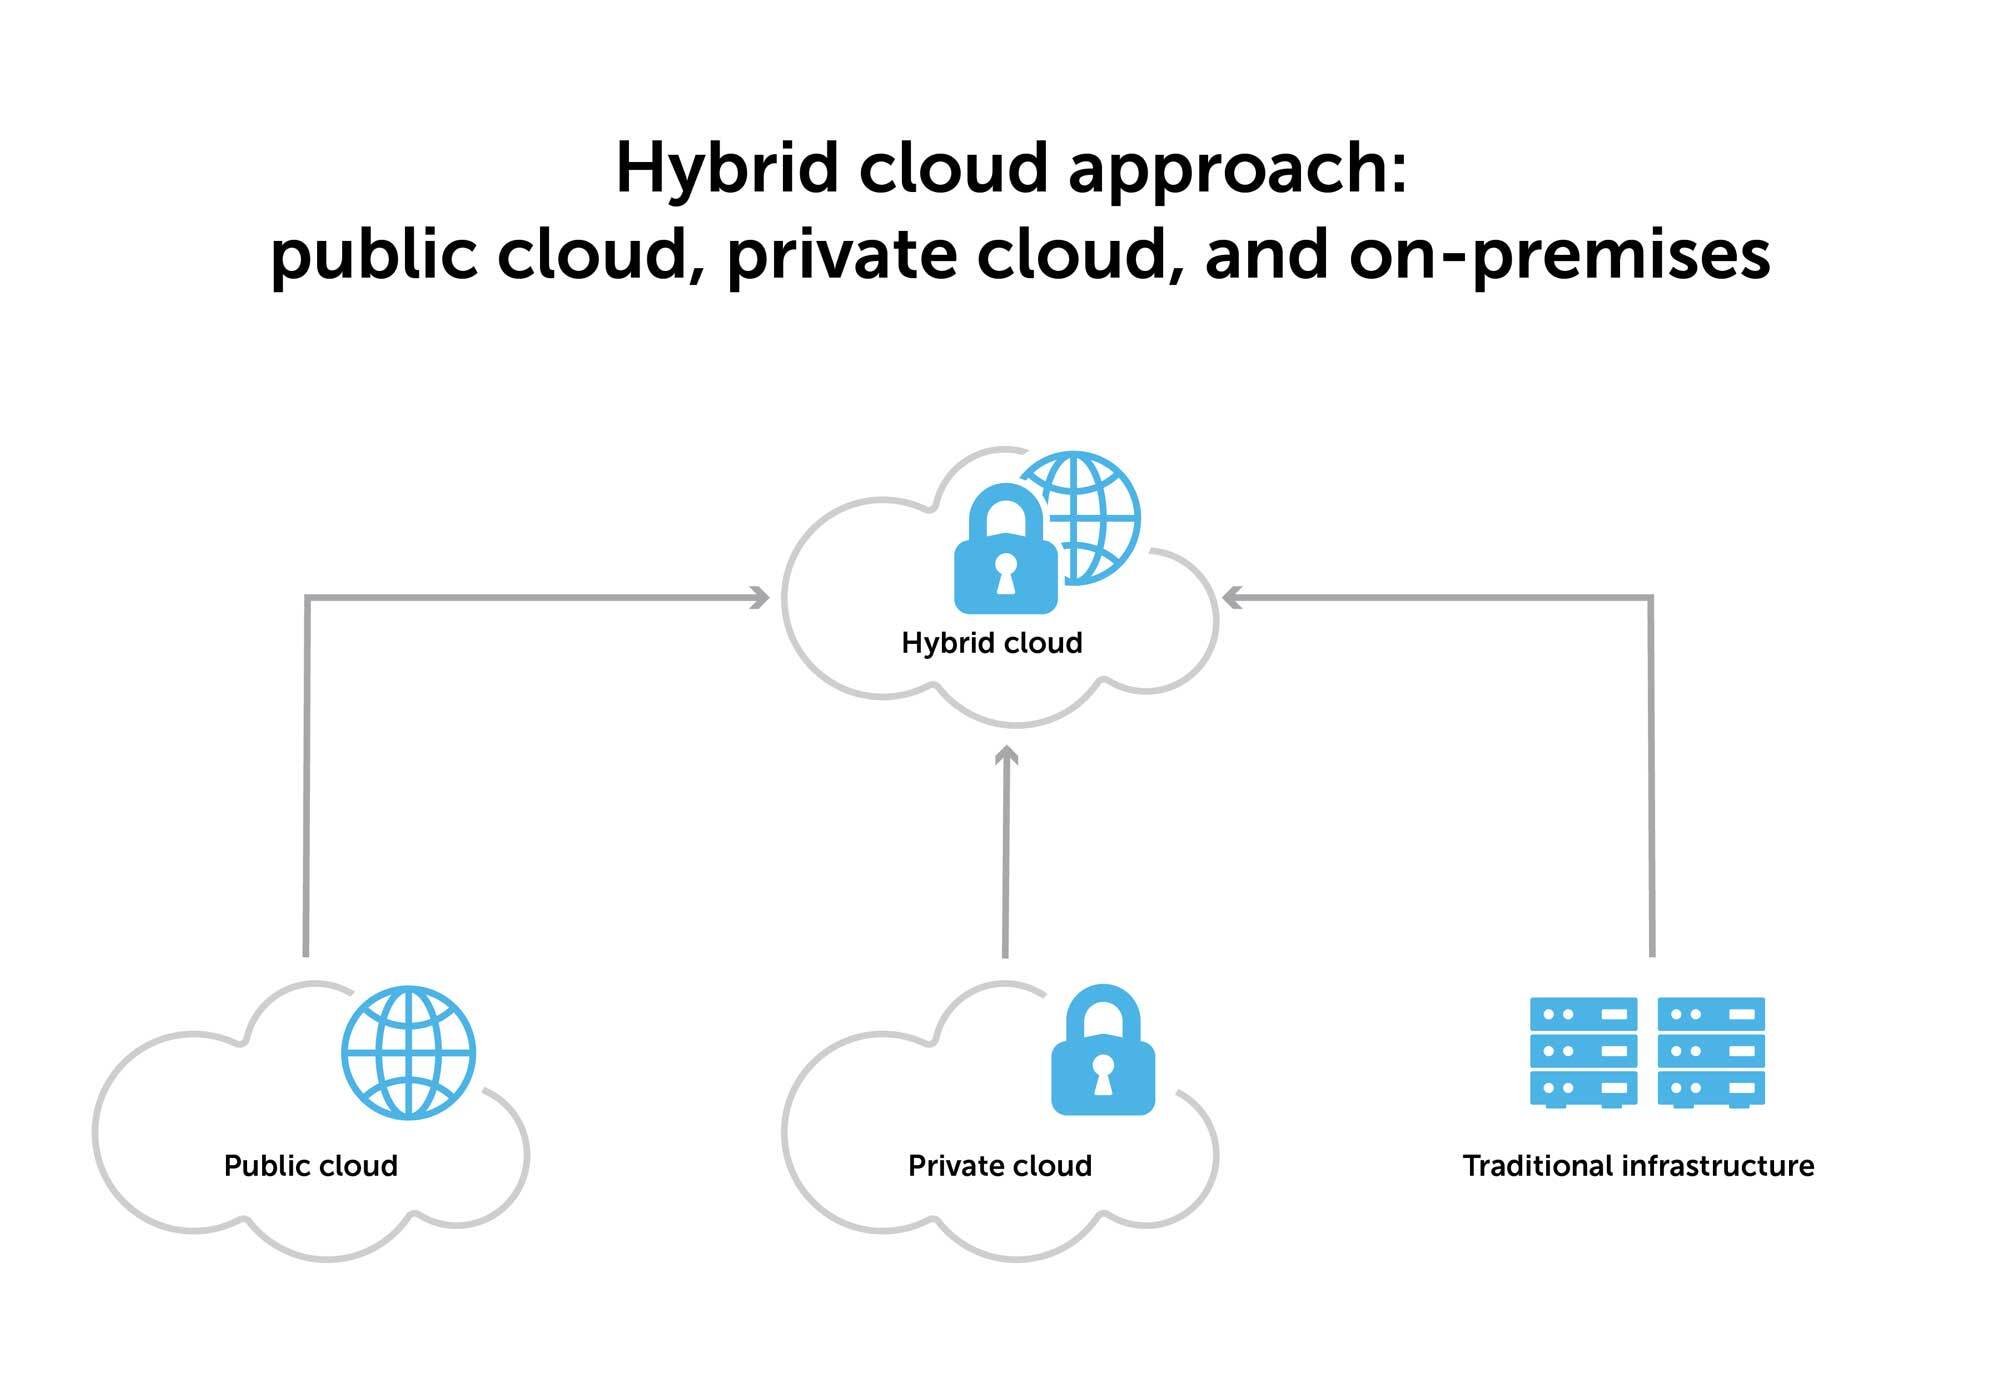 A hybrid cloud approach includes public cloud, private cloud, and on-premises